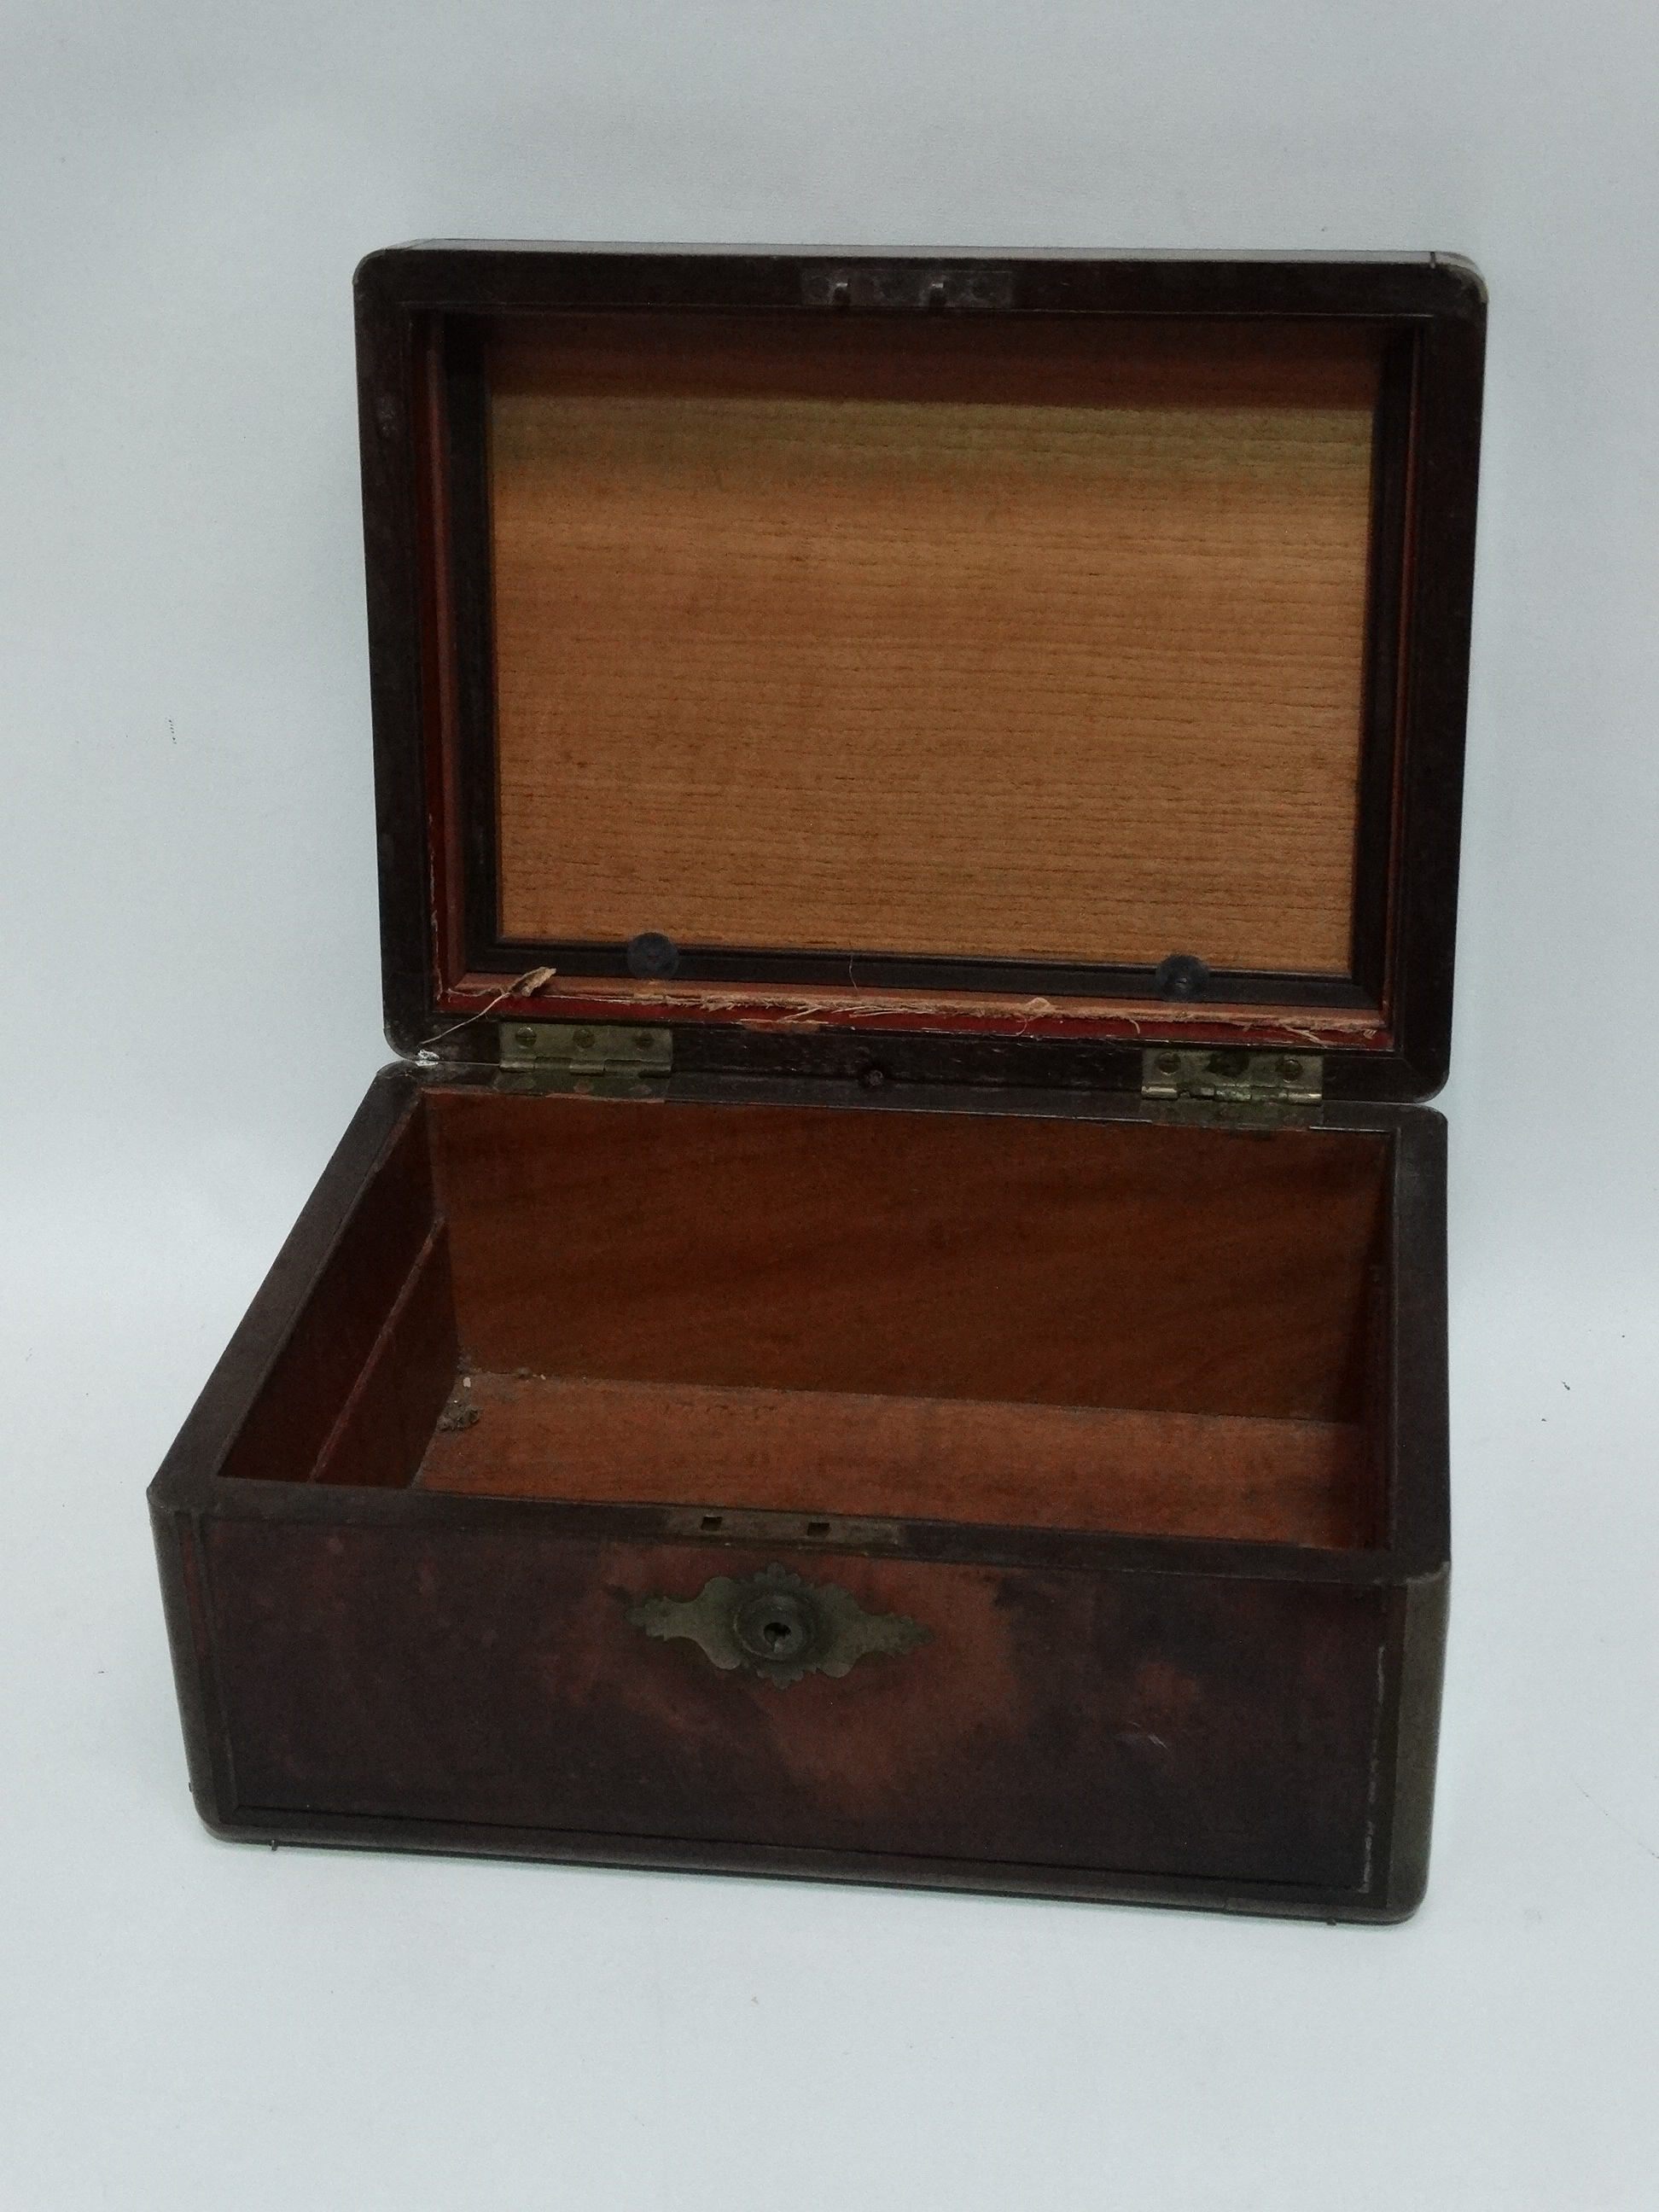 H. Webb & Co. Birmingham cast iron scales - brass trays, height 18cm, width 40cm, a brass bound - Image 4 of 4